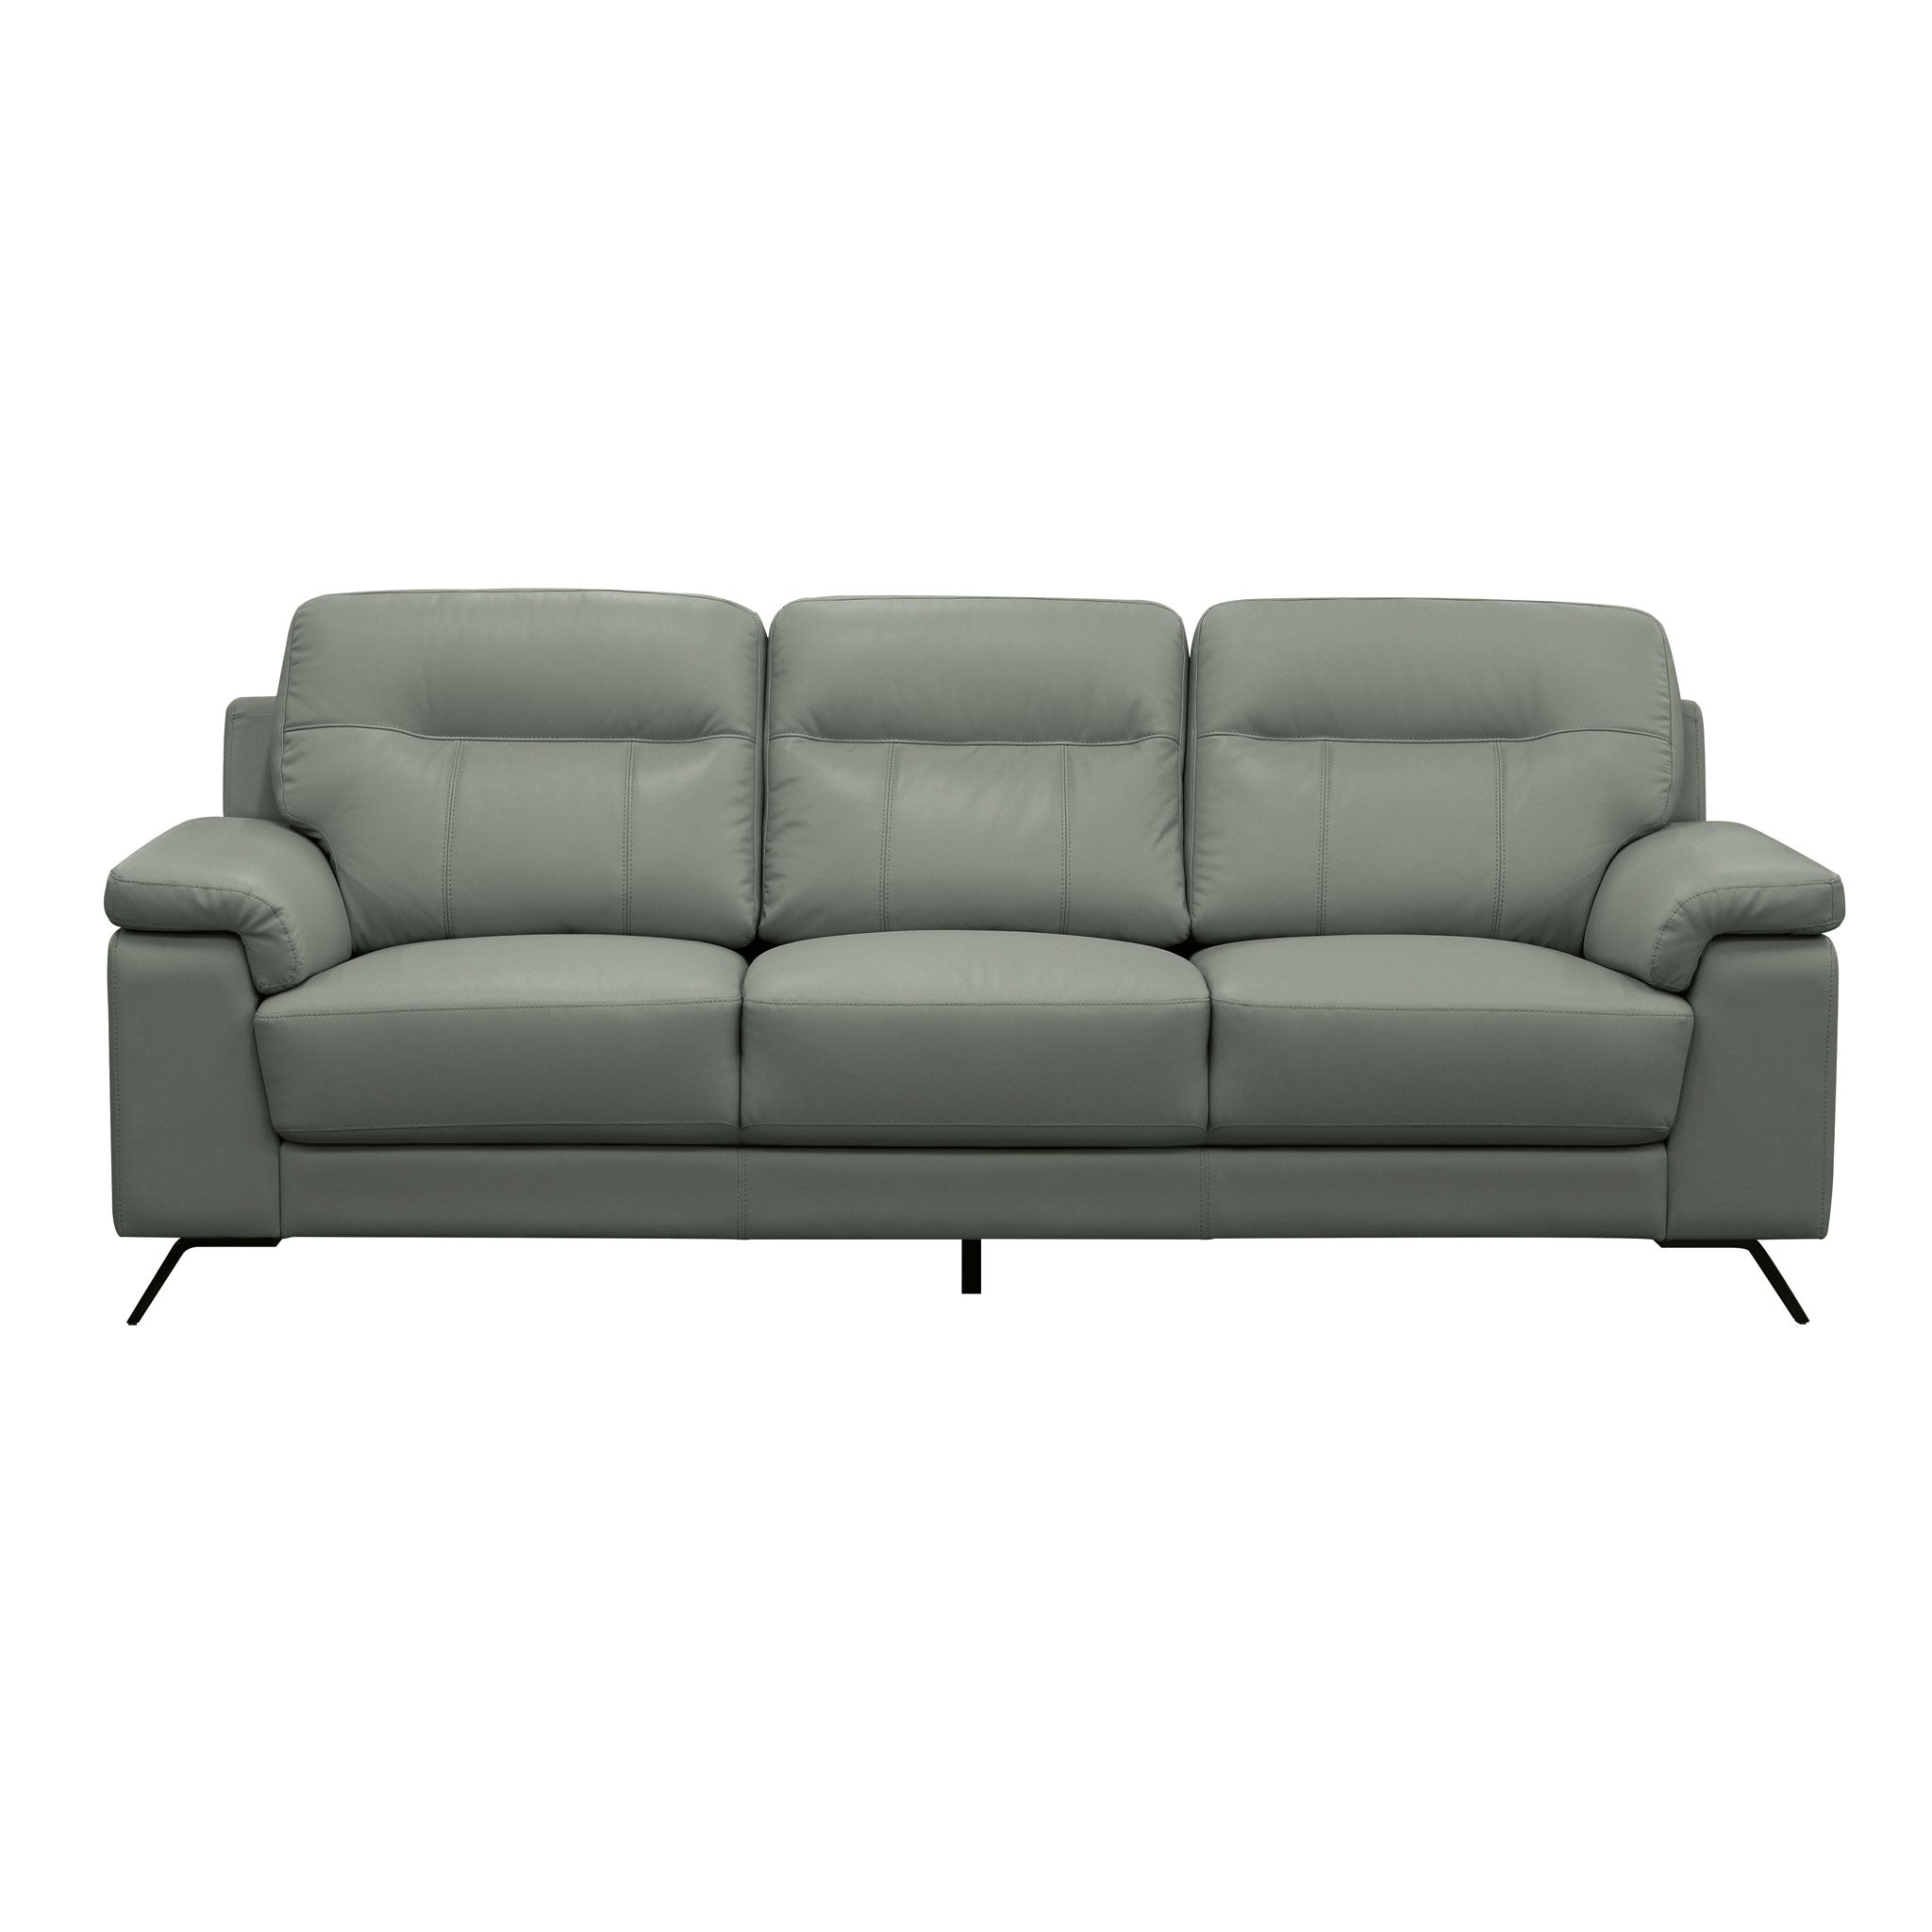 Bellmar Leather Sofa